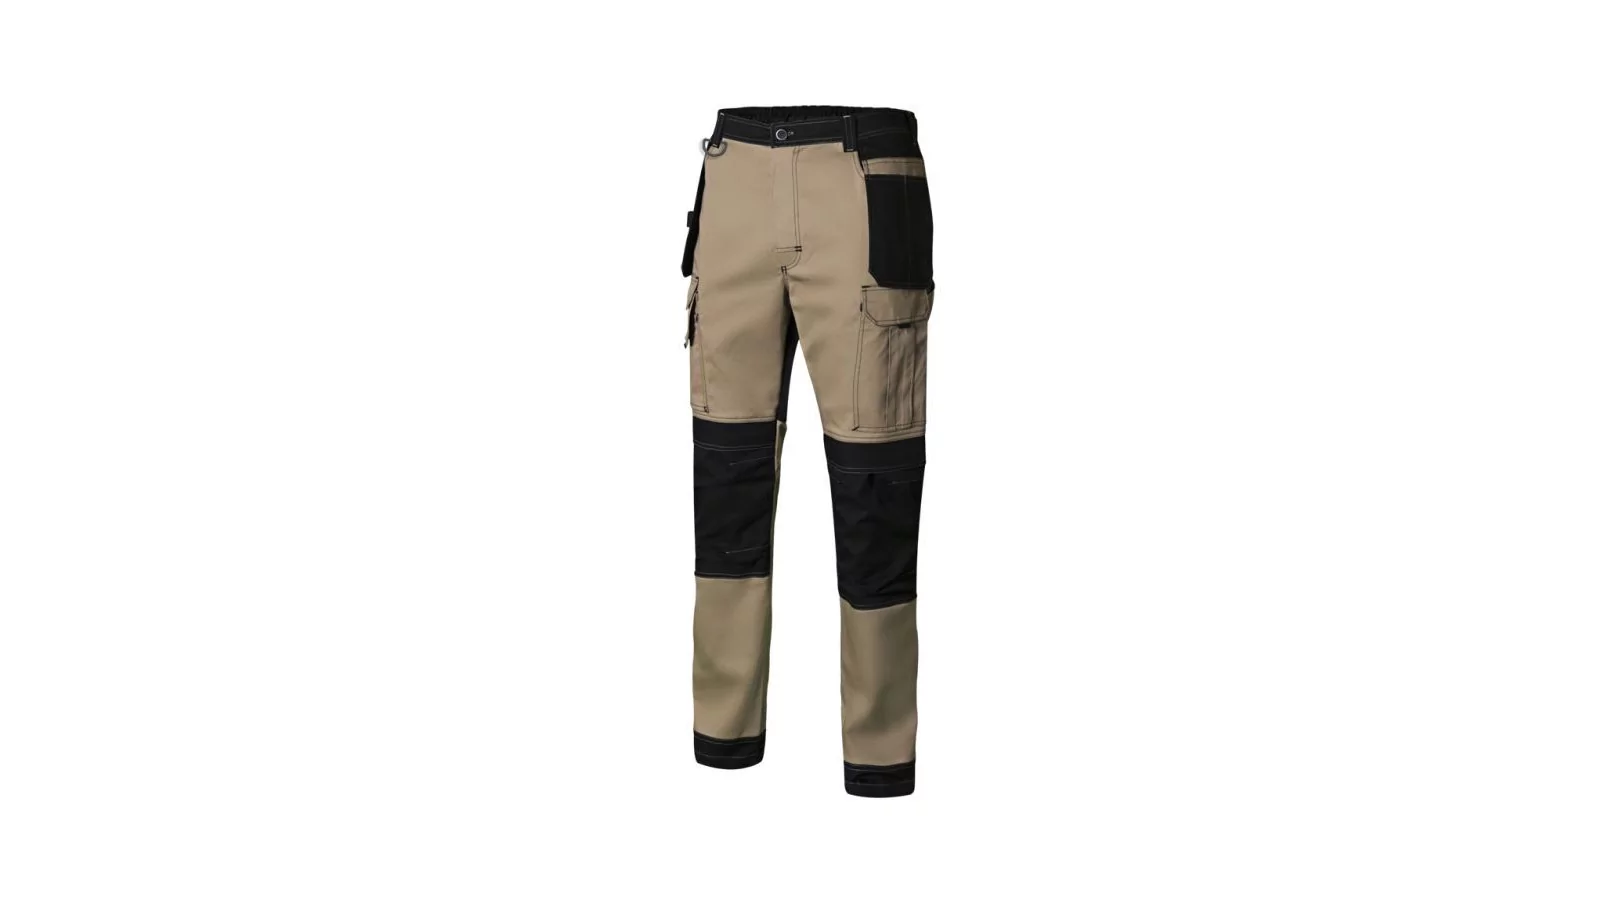 Pantalon canvas stretch avec poches flottantes